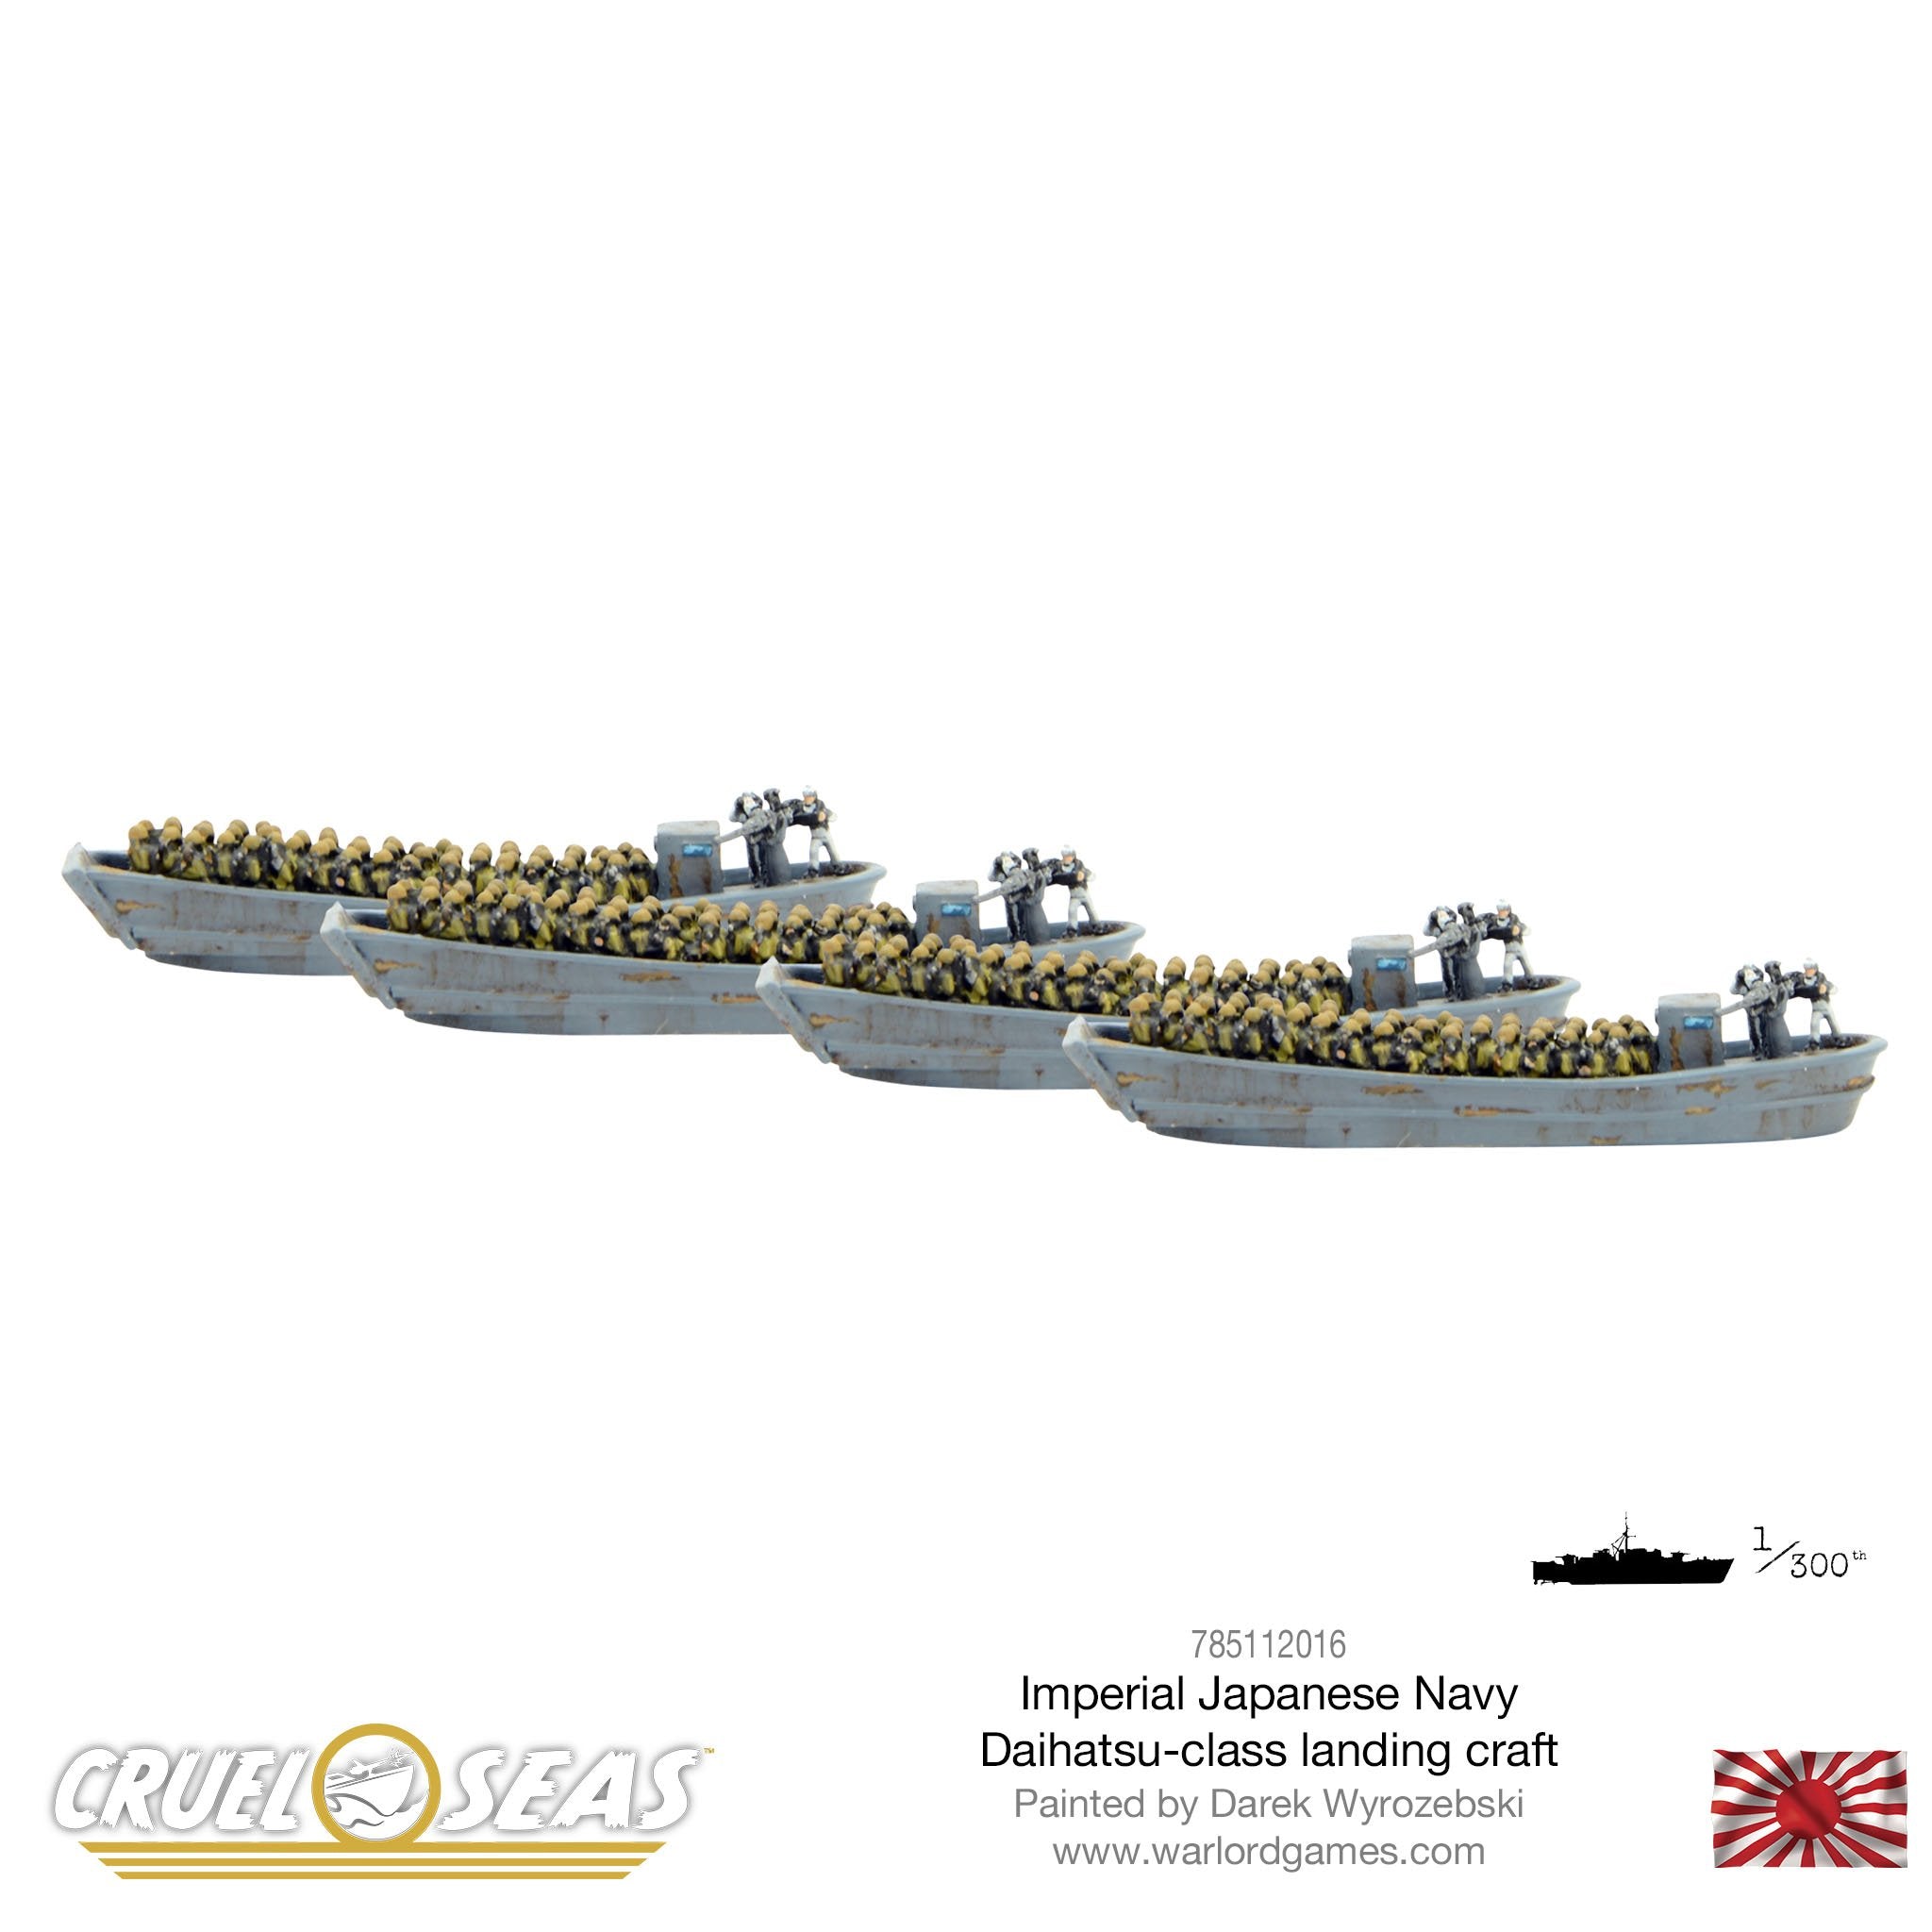 Imperial Japanese Navy Daihatsu-class landing craft